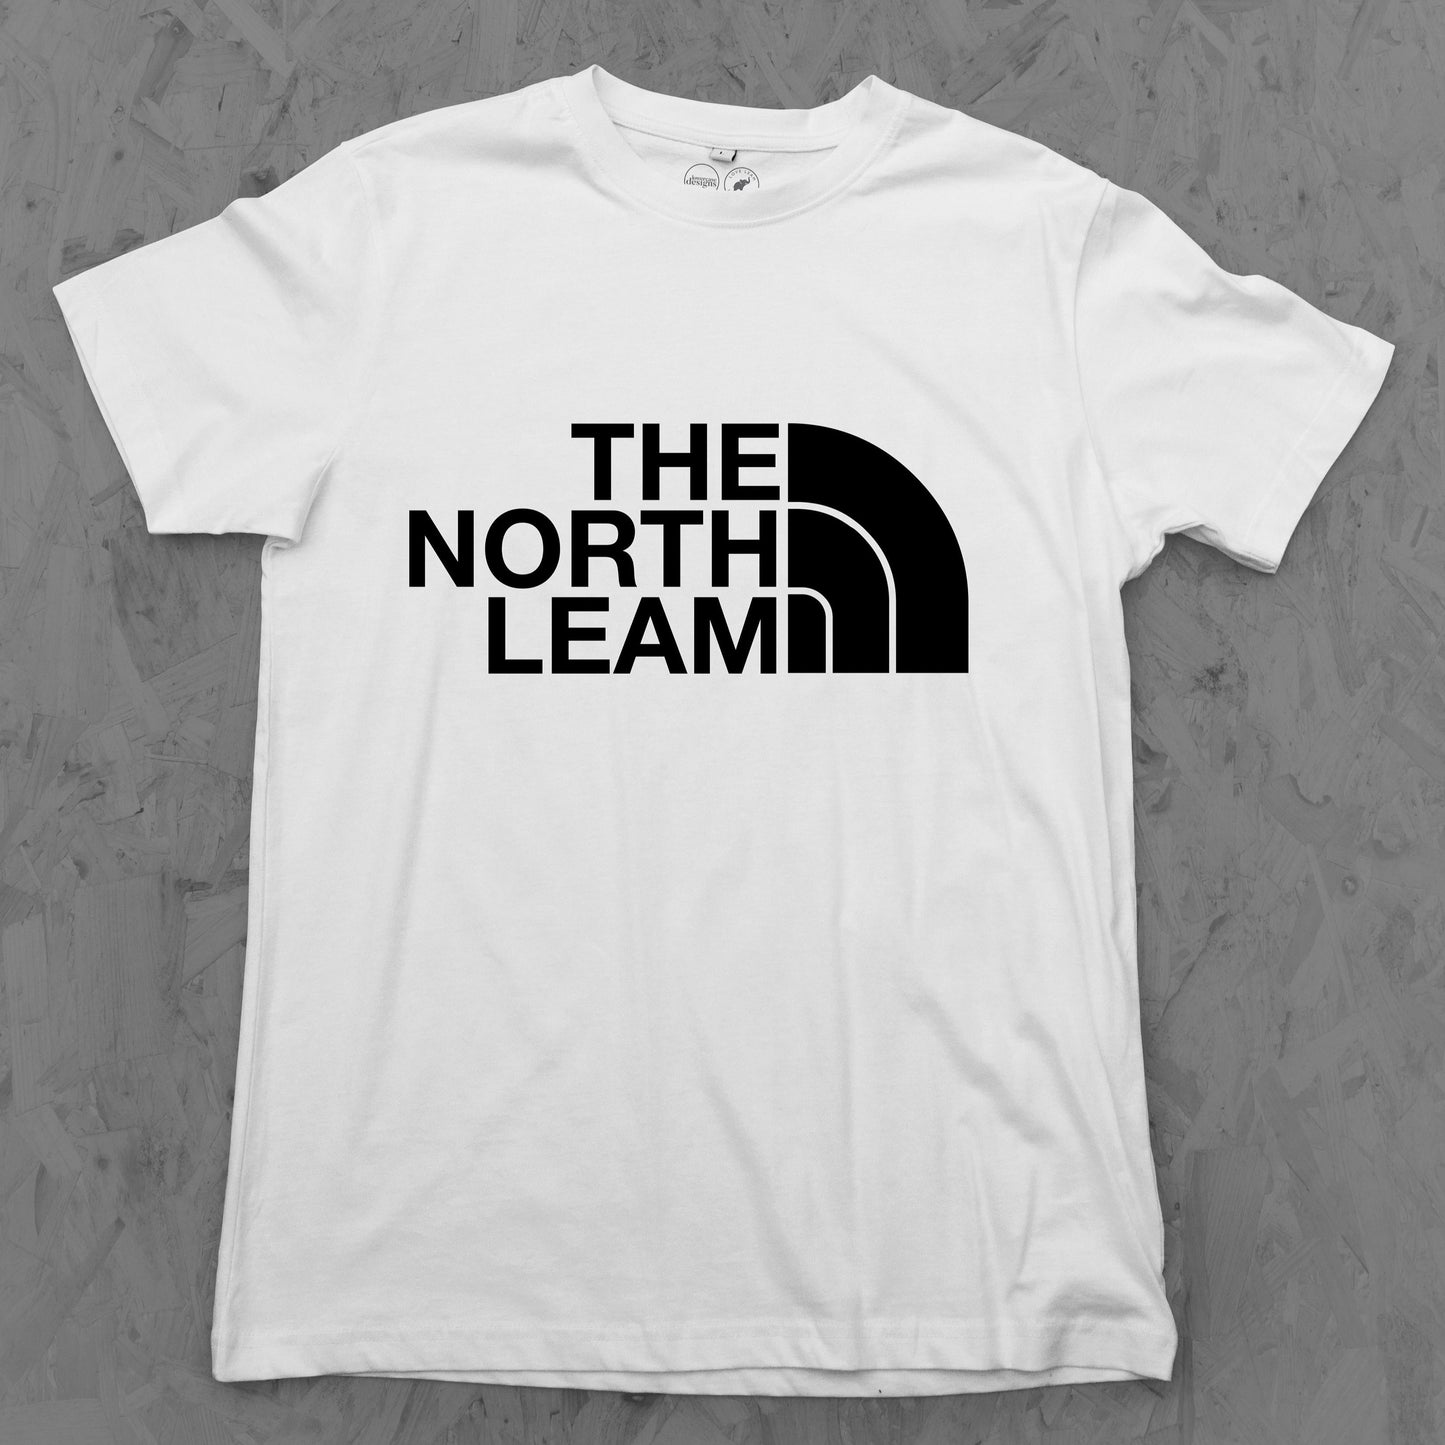 The North Leam Tee Child's sizes 3-14 years